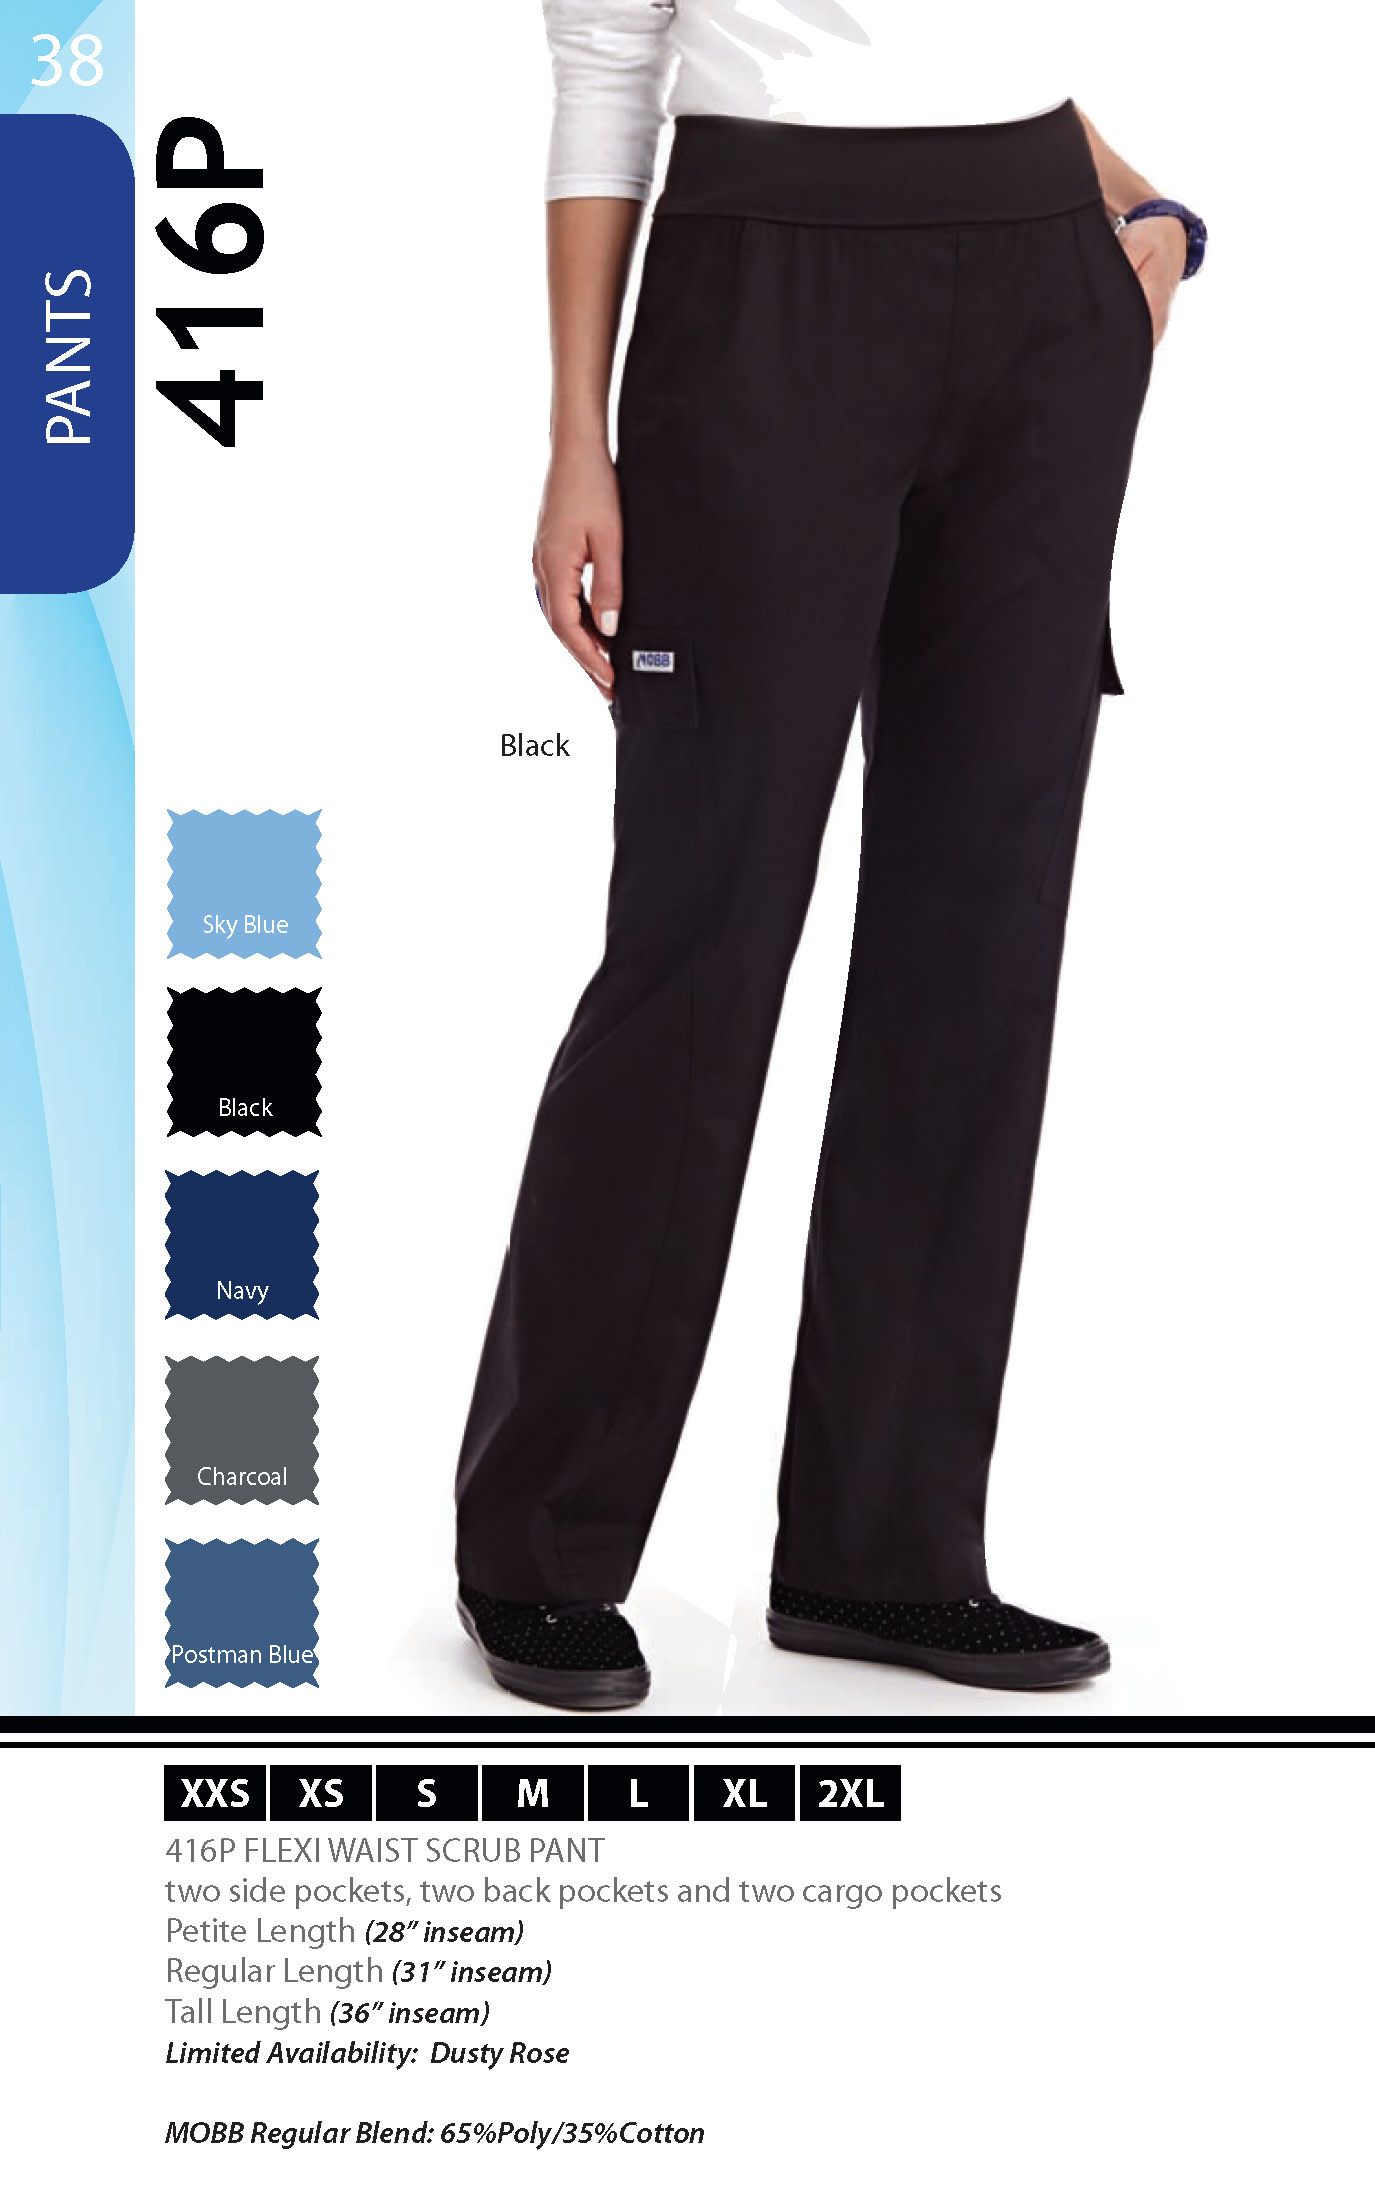 Flexi waist scrub pant - 416P - Express Uniforms